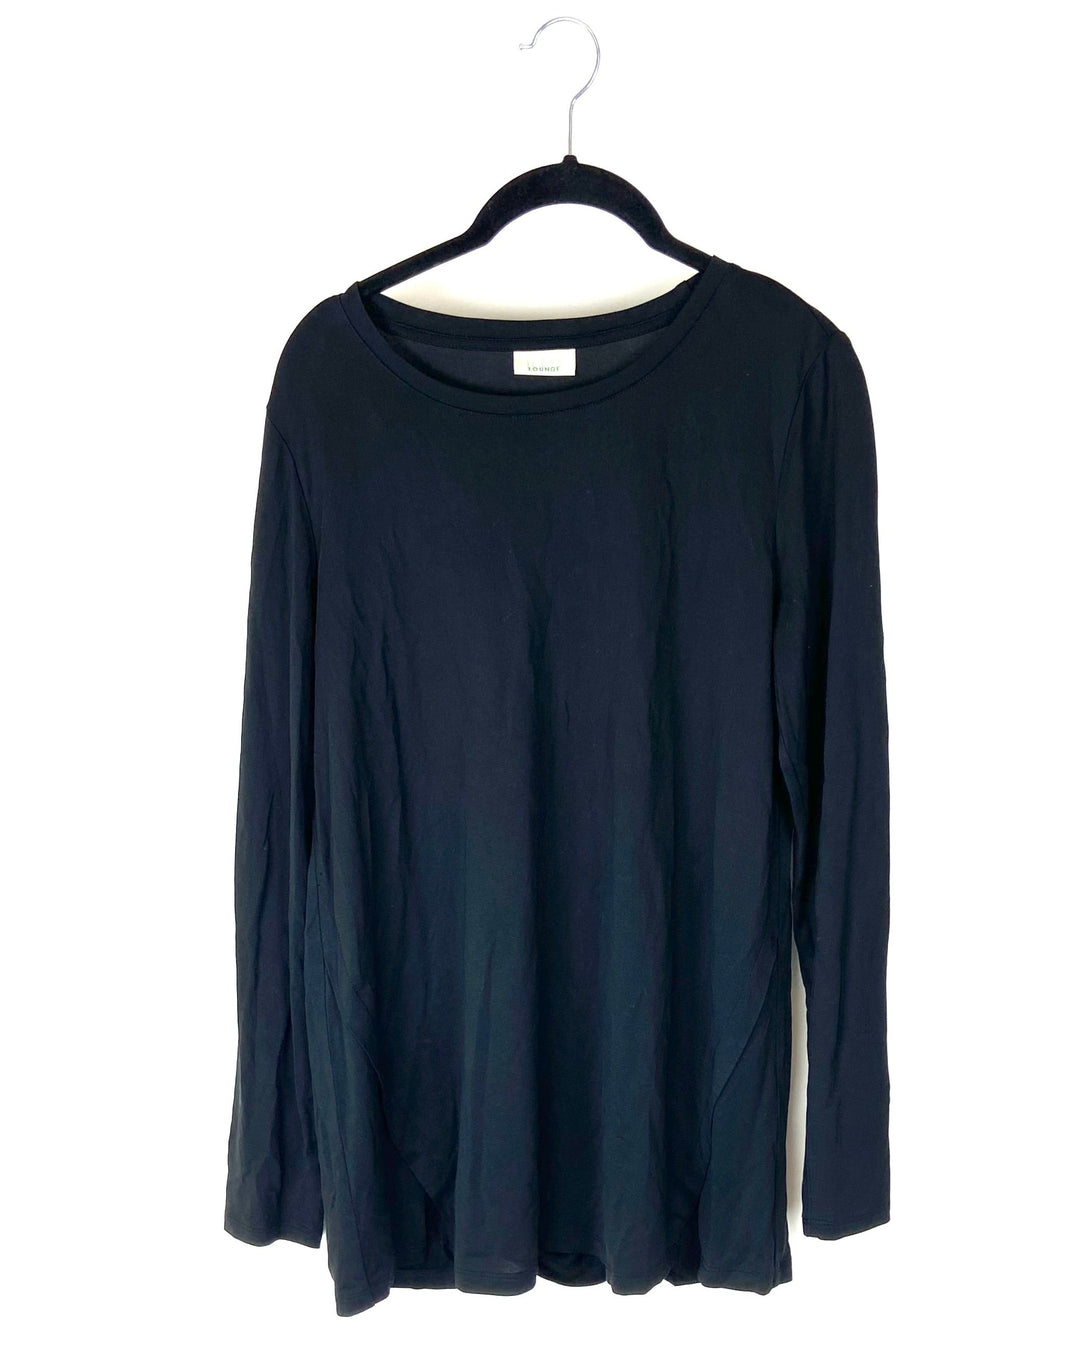 Black Long Sleeve Shirt- Size 6-8